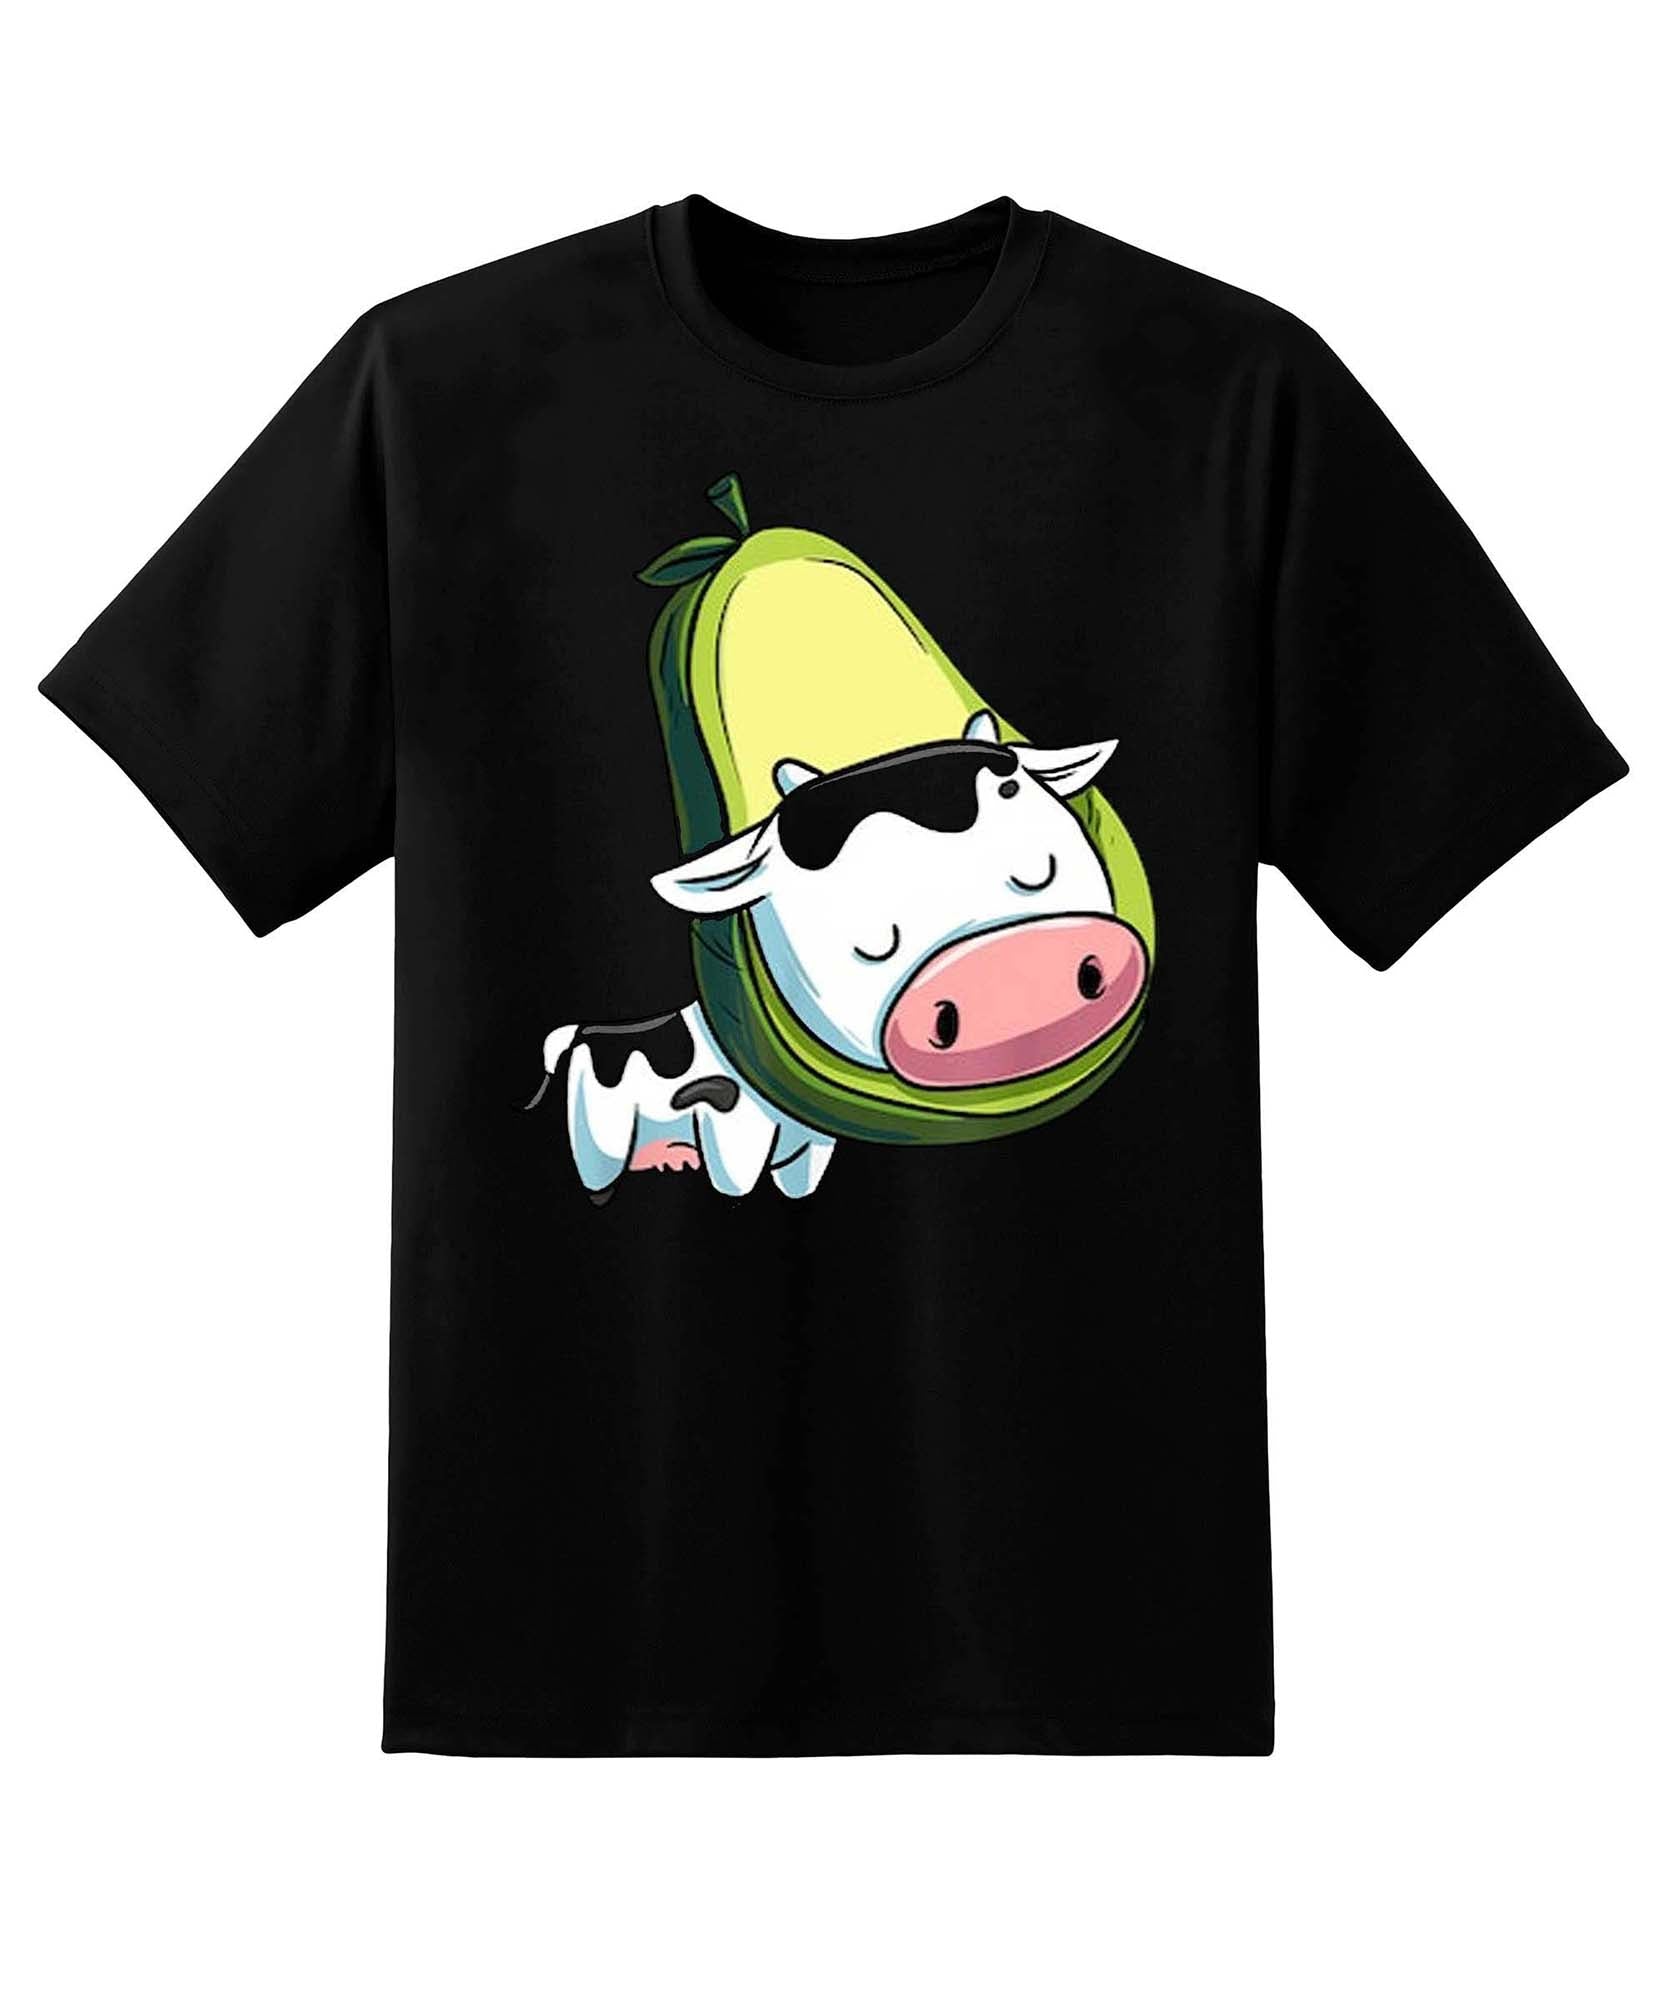 Skitongift Love Avocado And Cow Avocado Halloween Costume T Shirt Funn